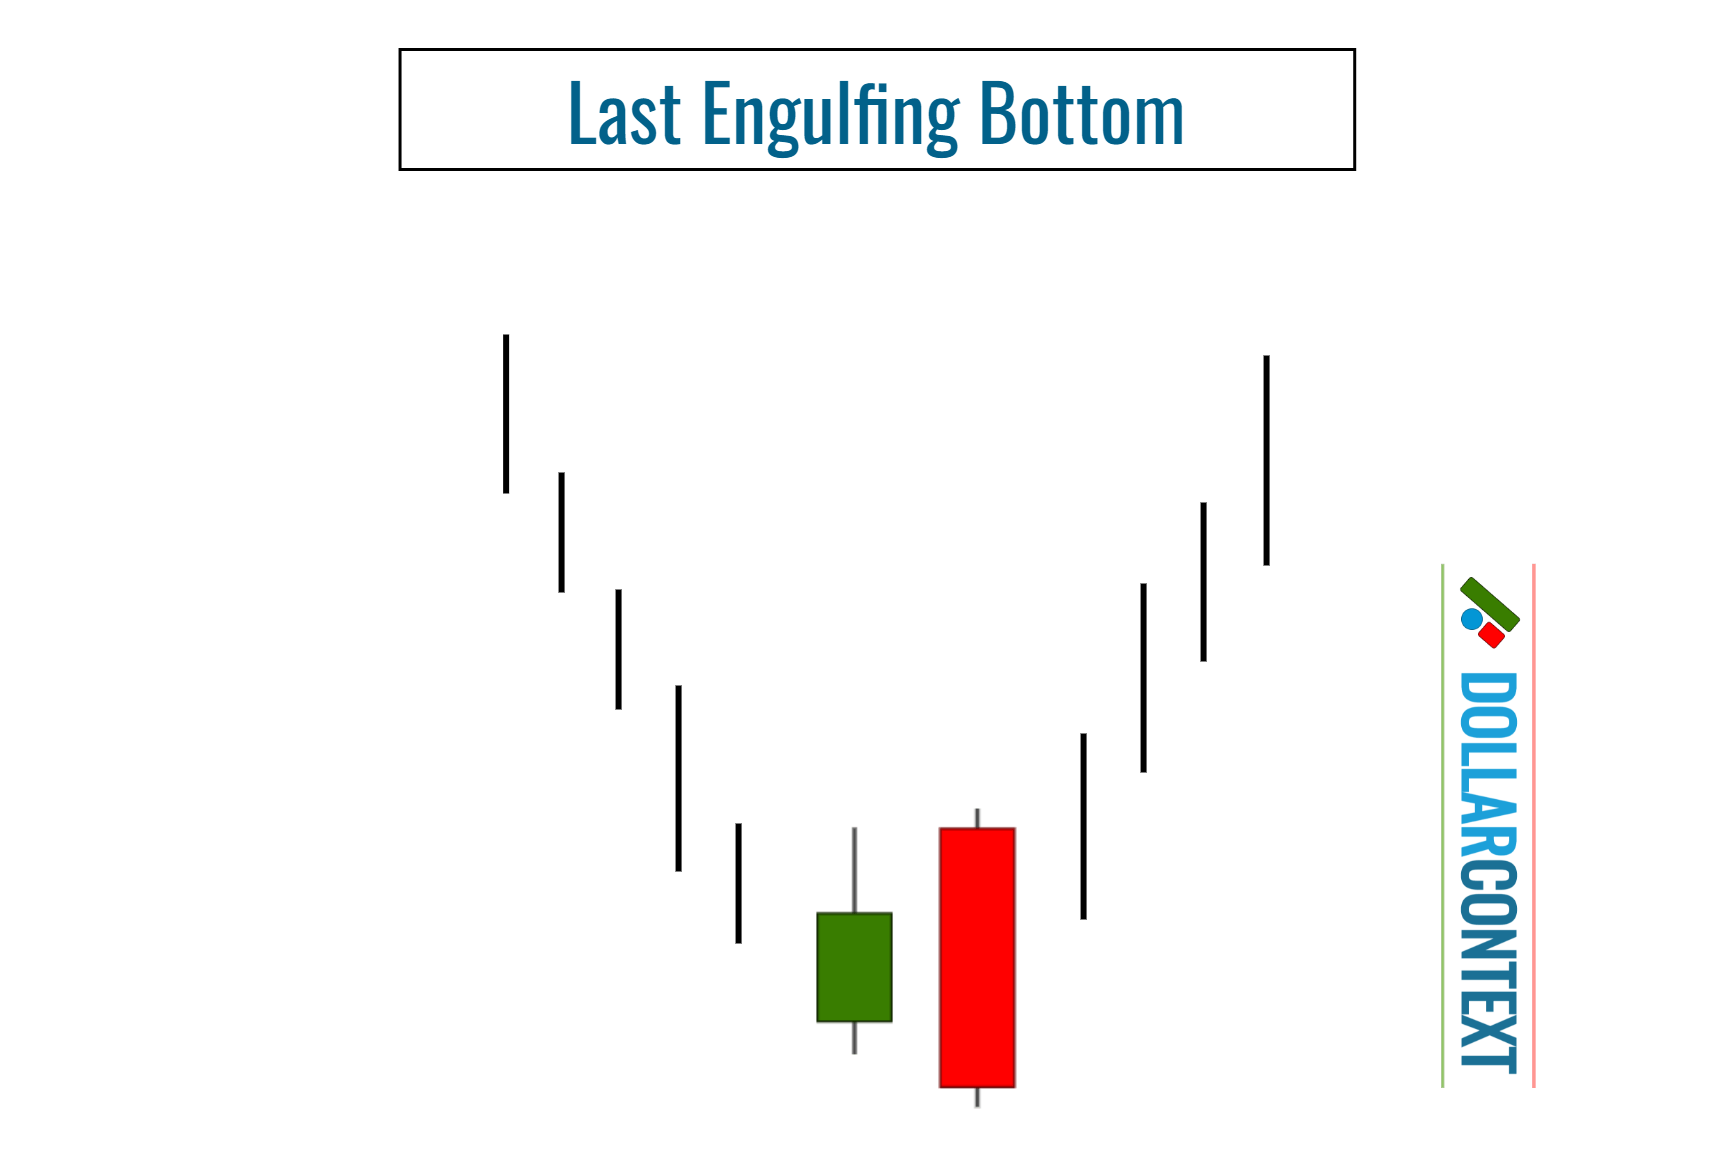 Last Engulfing Bottom